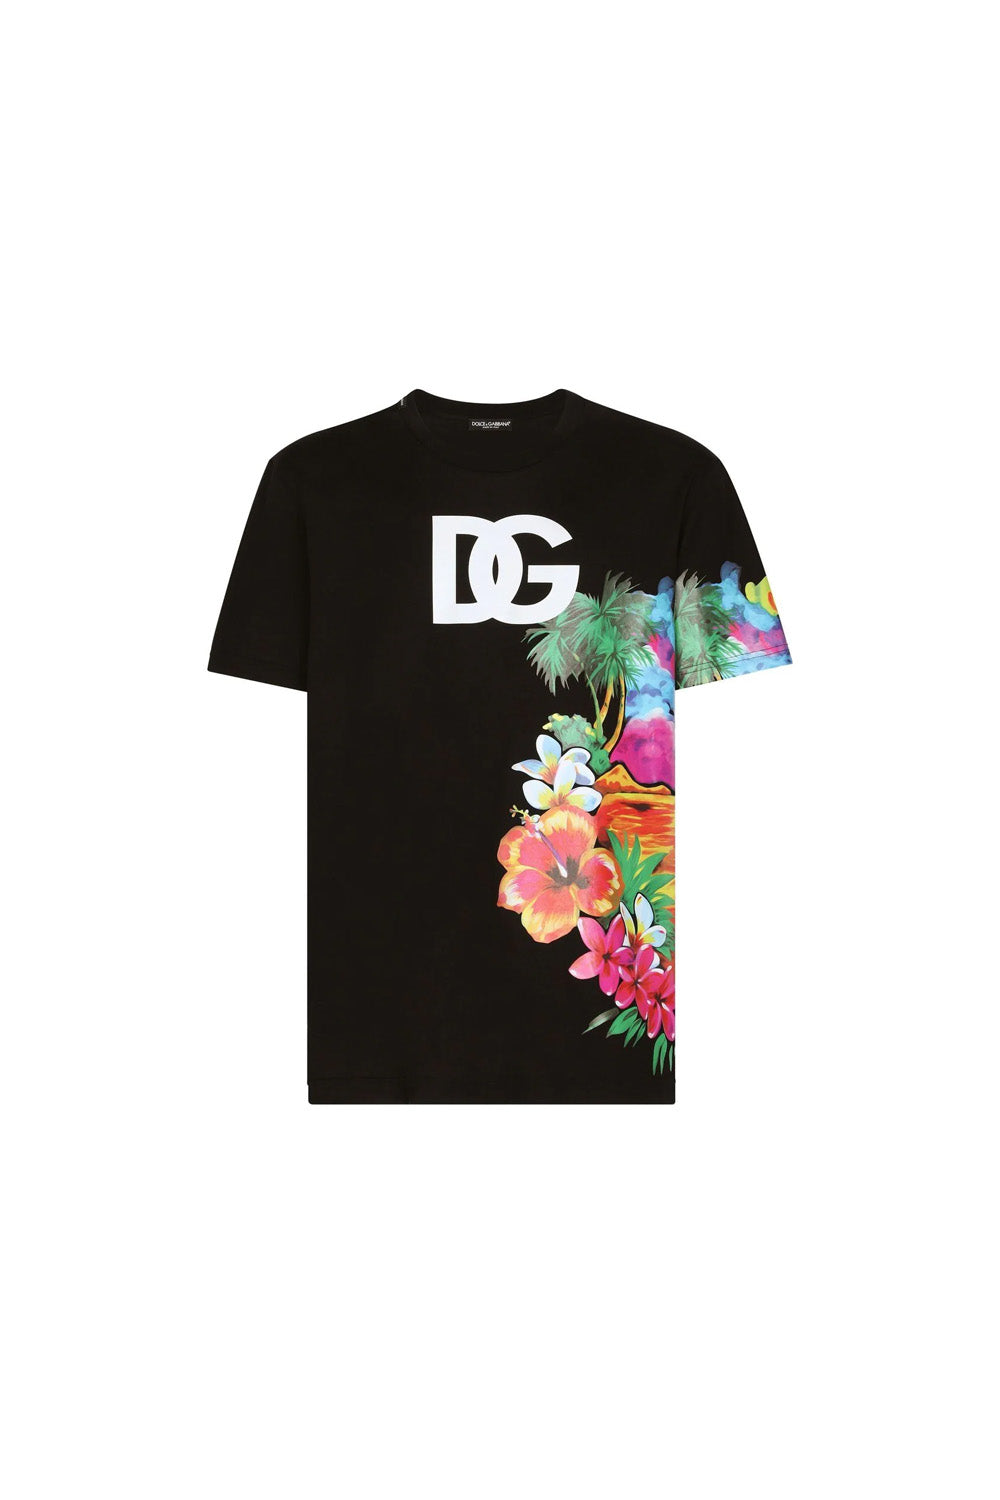 Dolce & Gabbana floral print DG T-shirt